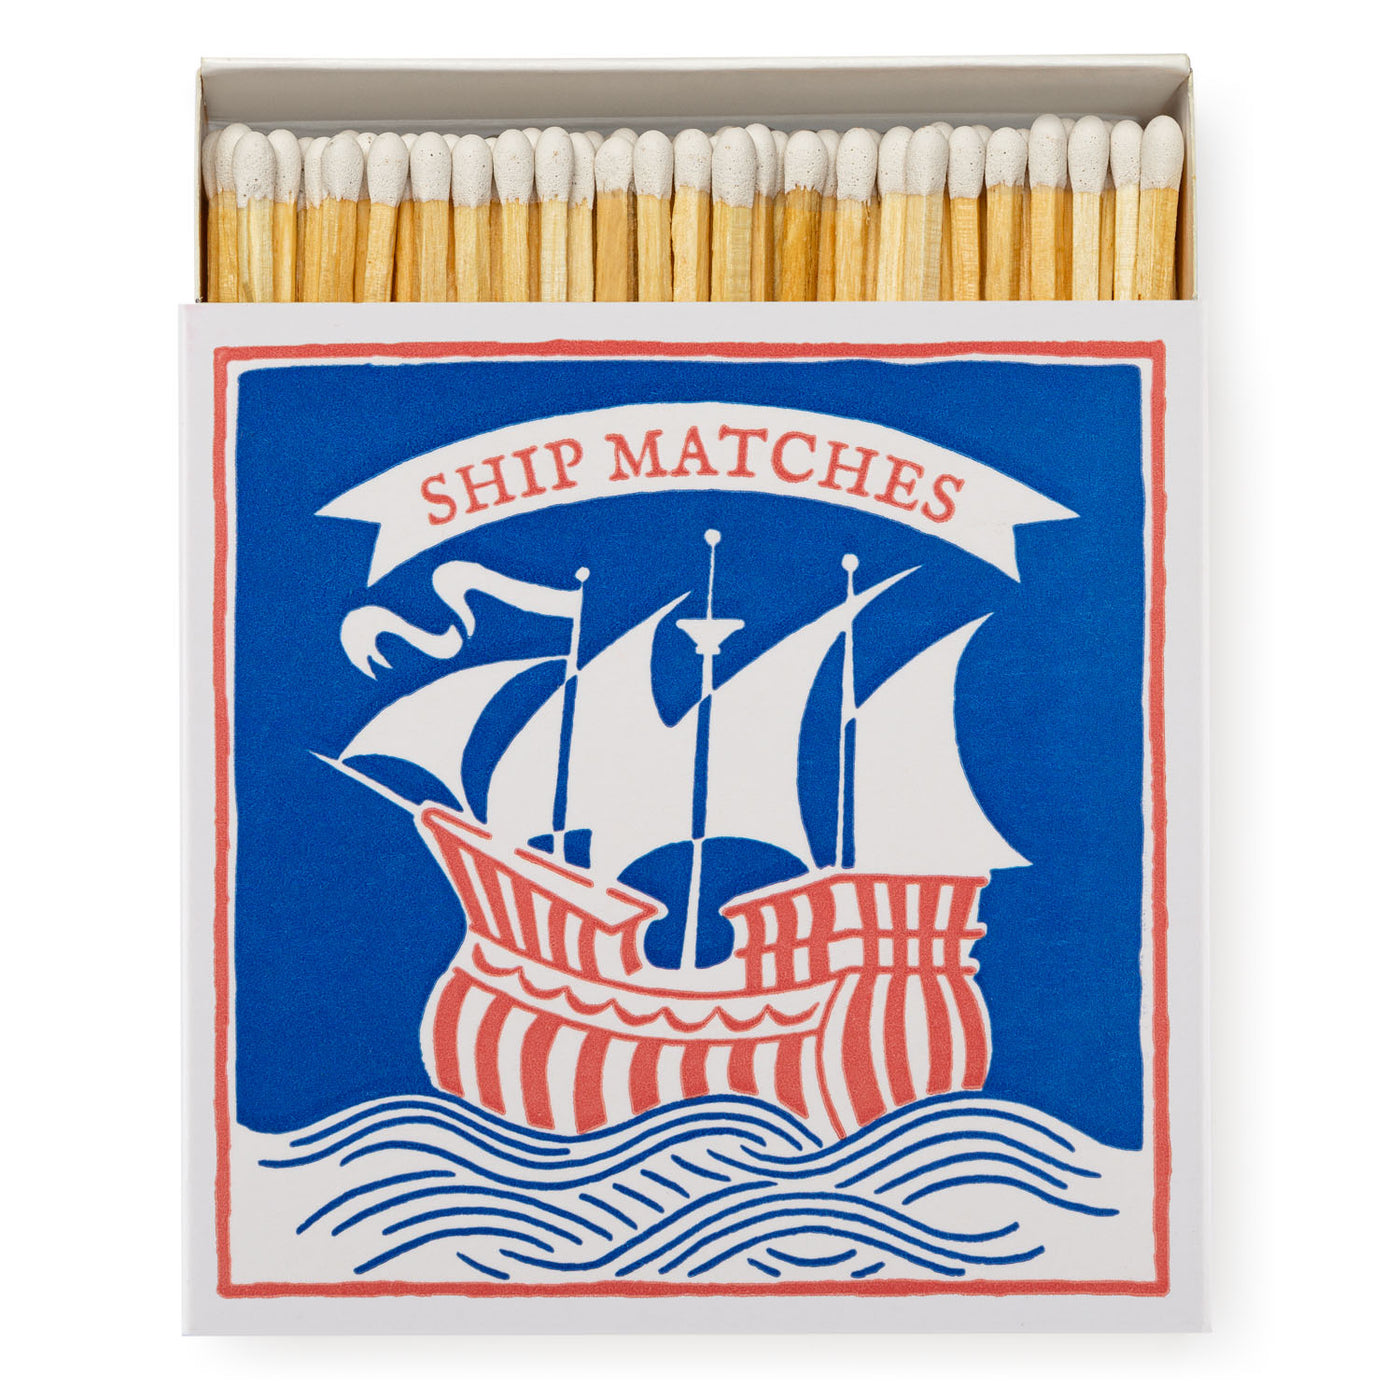 Ship Matches